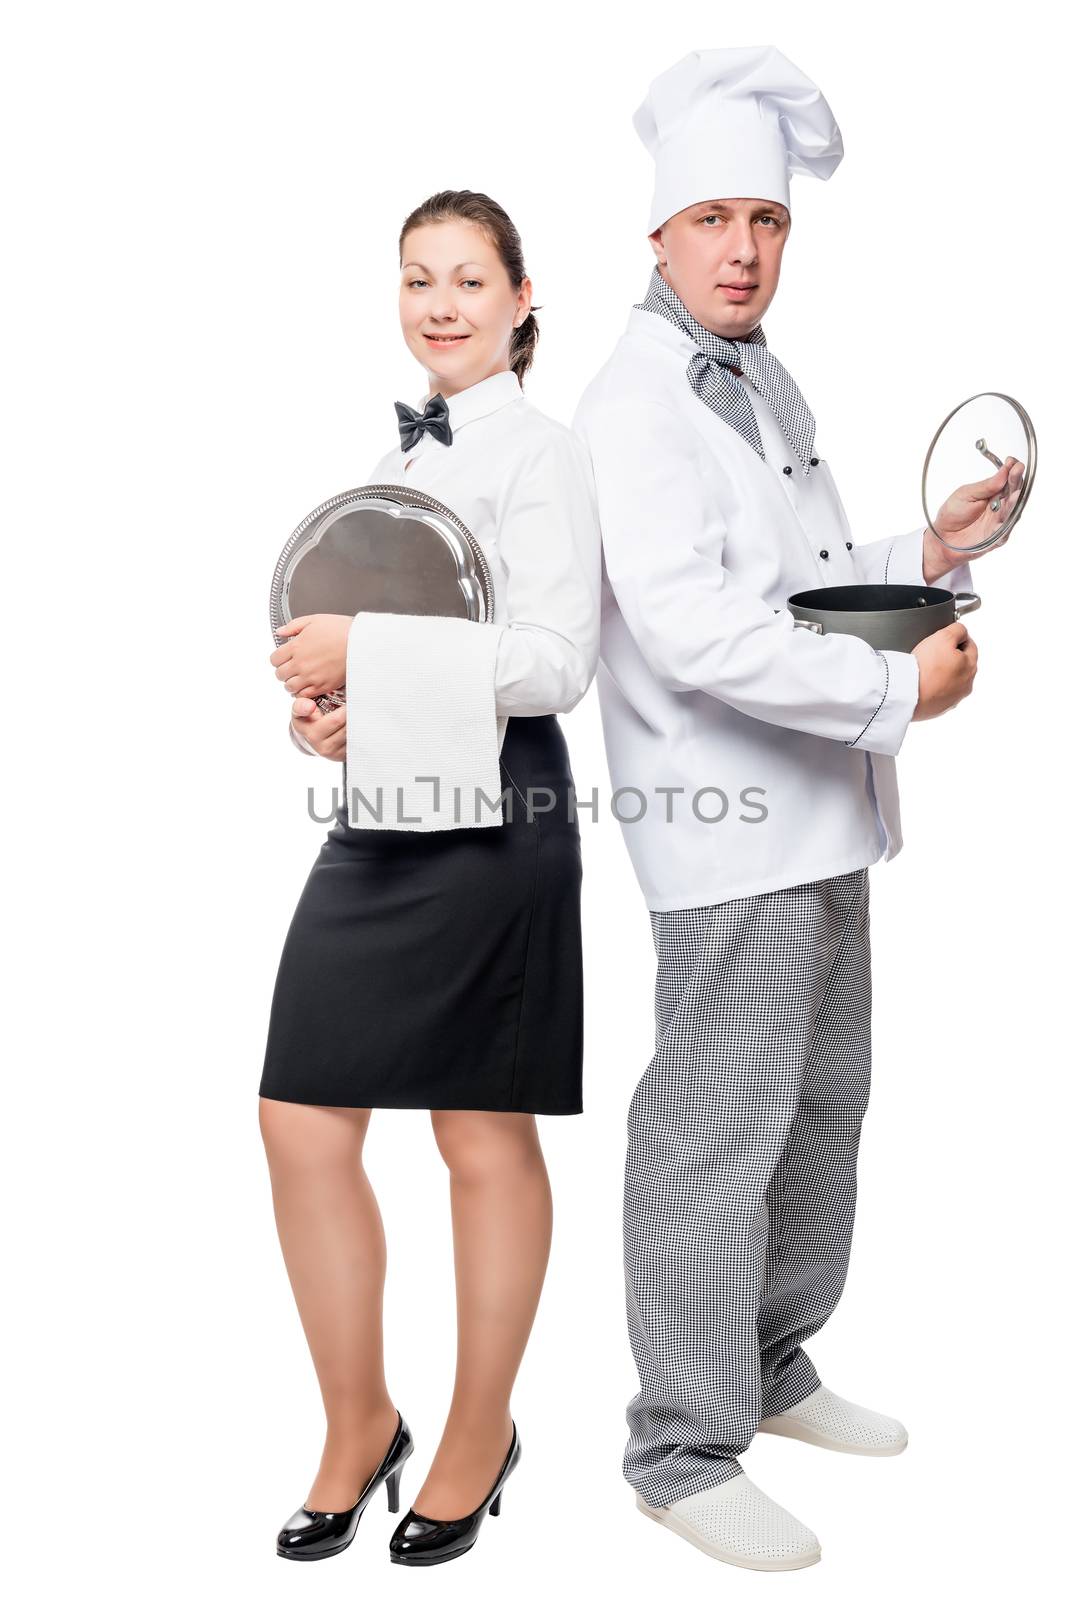 Team waiter and chef portrait on white background